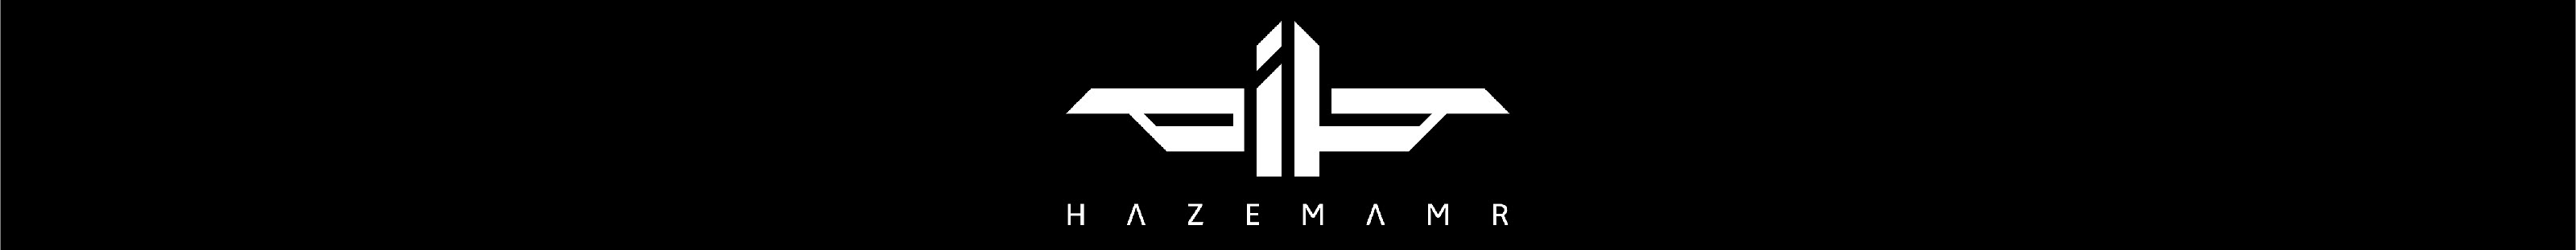 Banner de perfil de Hazem Amr